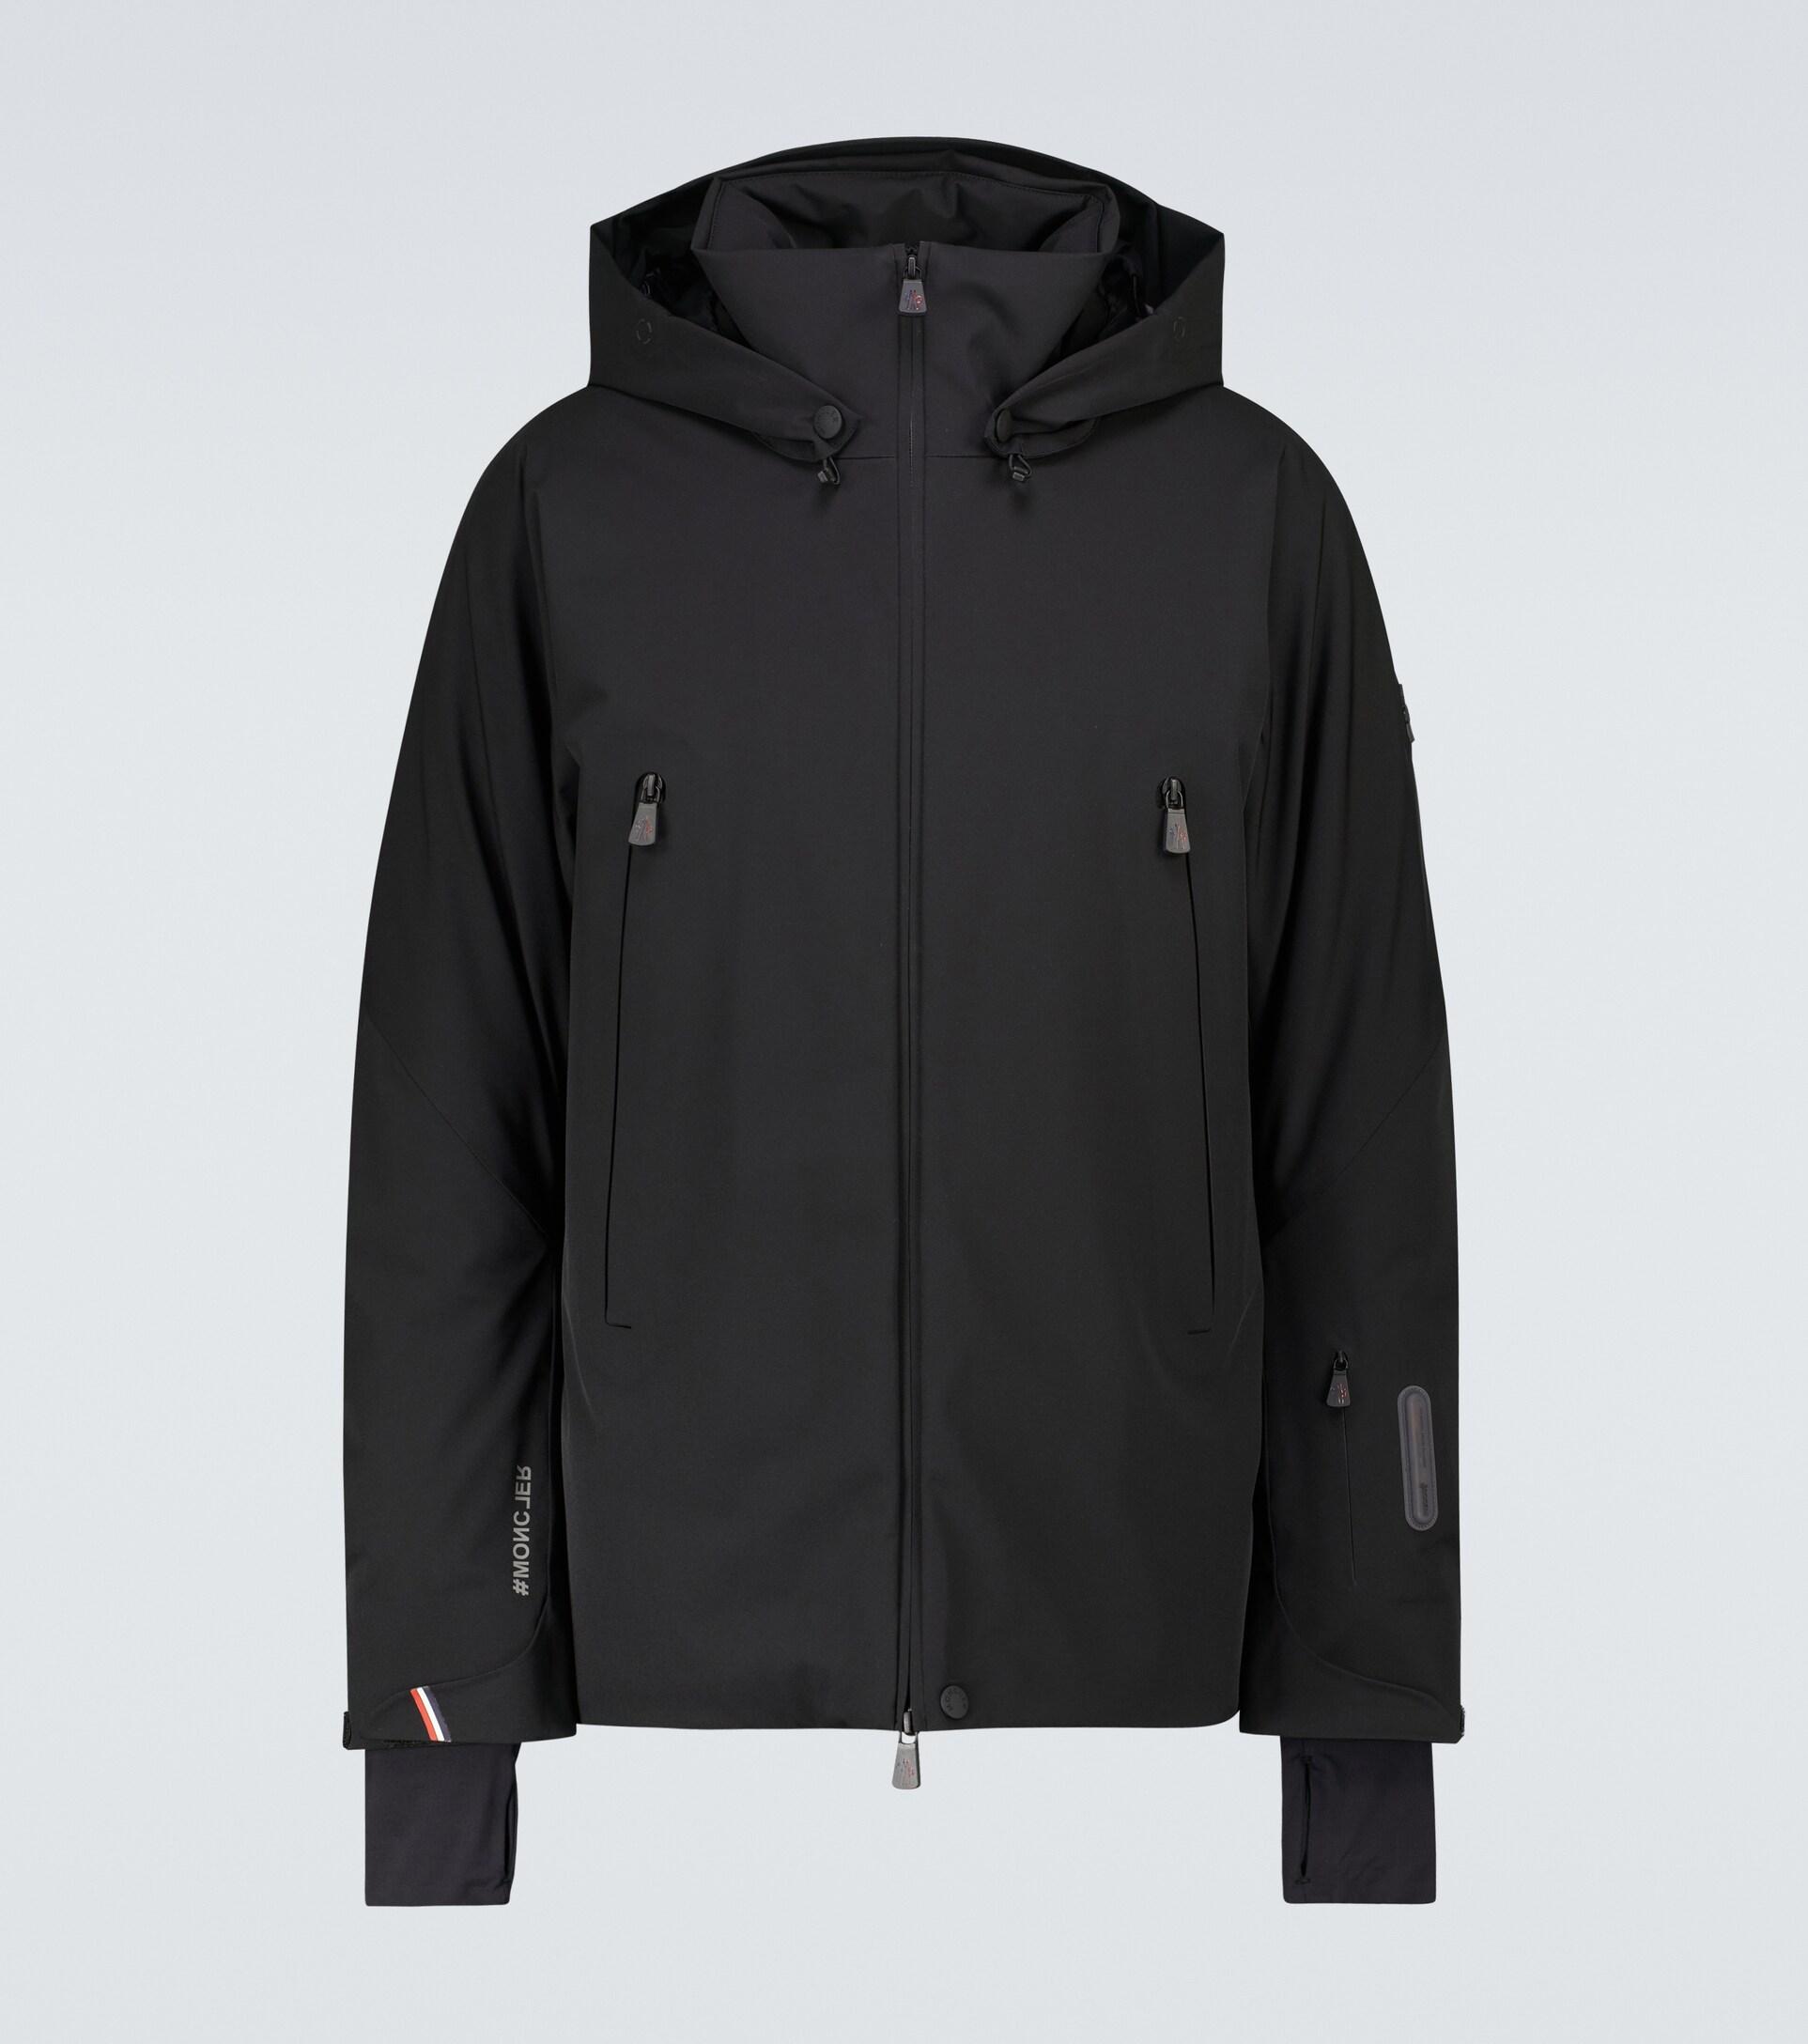 3 MONCLER GRENOBLE Boden Technical Jacket in Black for Men 